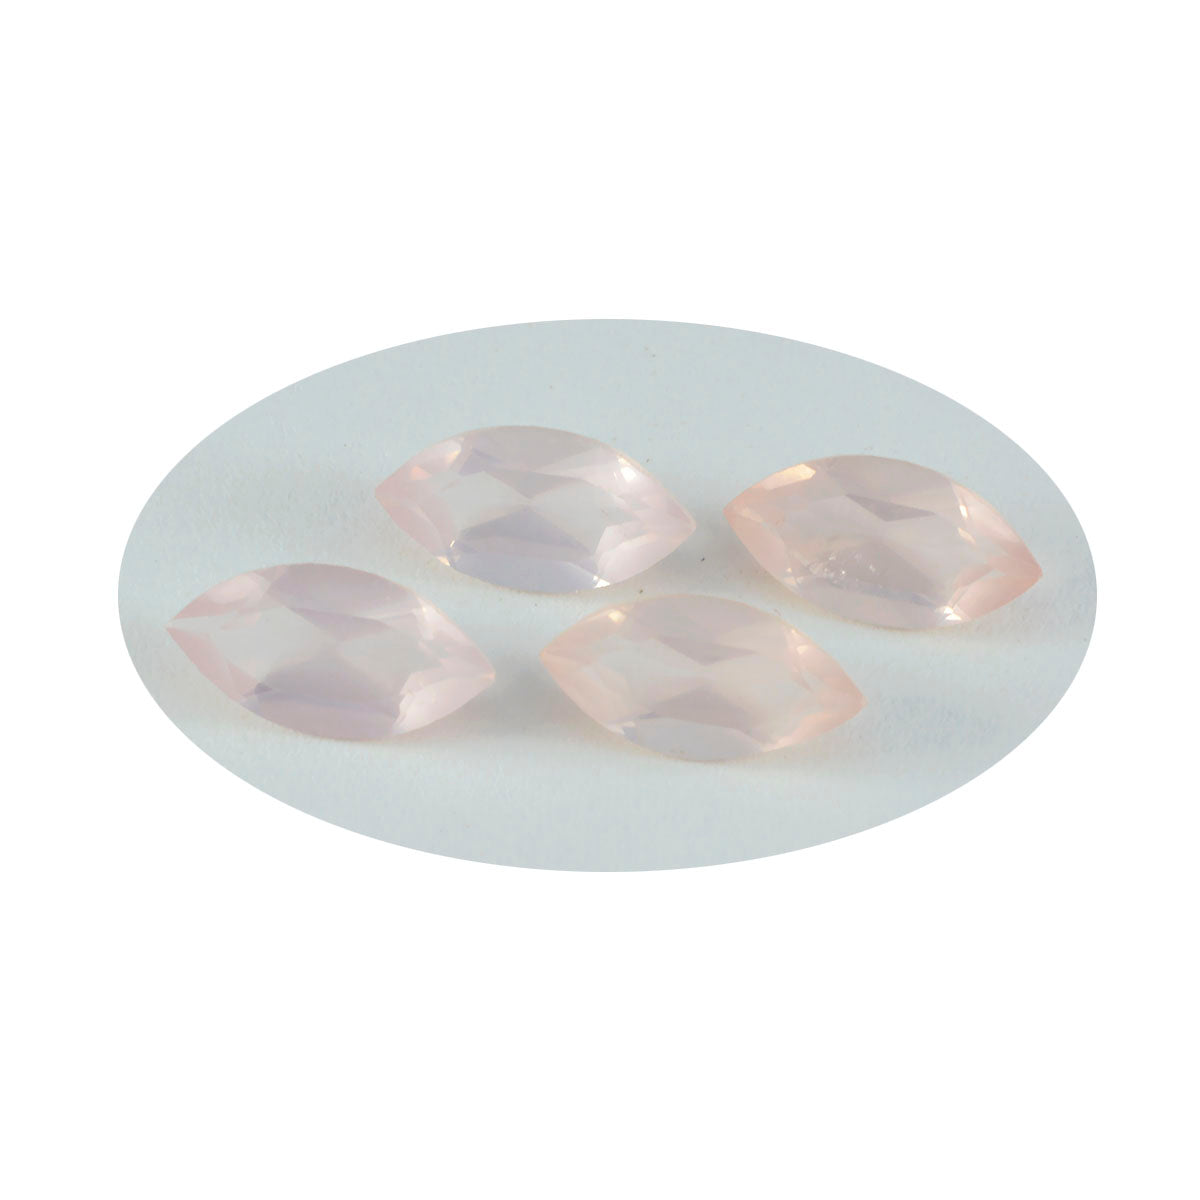 Riyogems 1PC Pink Rose Quartz Faceted 9x18 mm Marquise Shape attractive Quality Gemstone